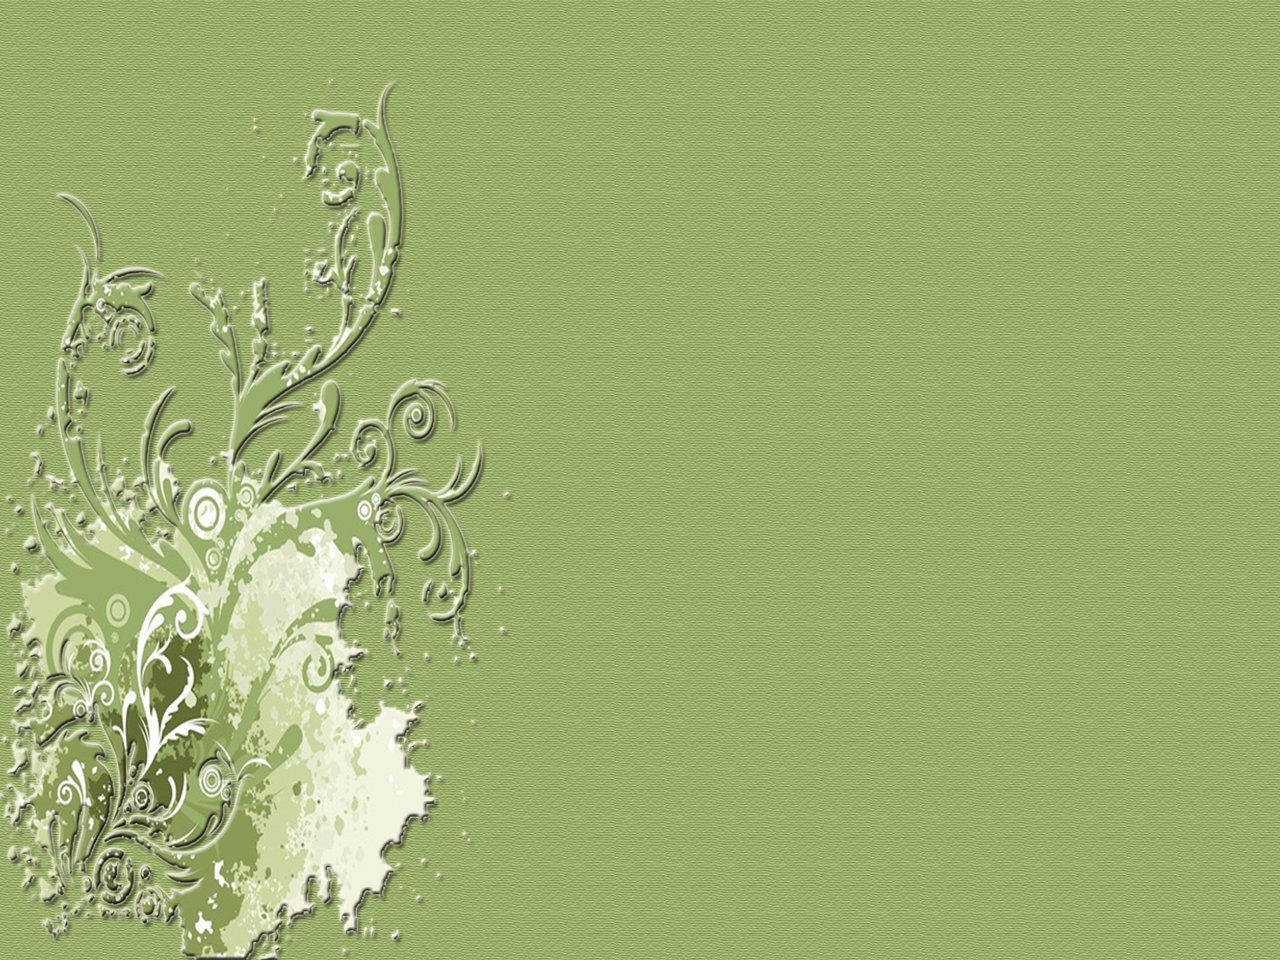 Free Sage Green Desktop Wallpaper Downloads, Sage Green Desktop Wallpaper for FREE